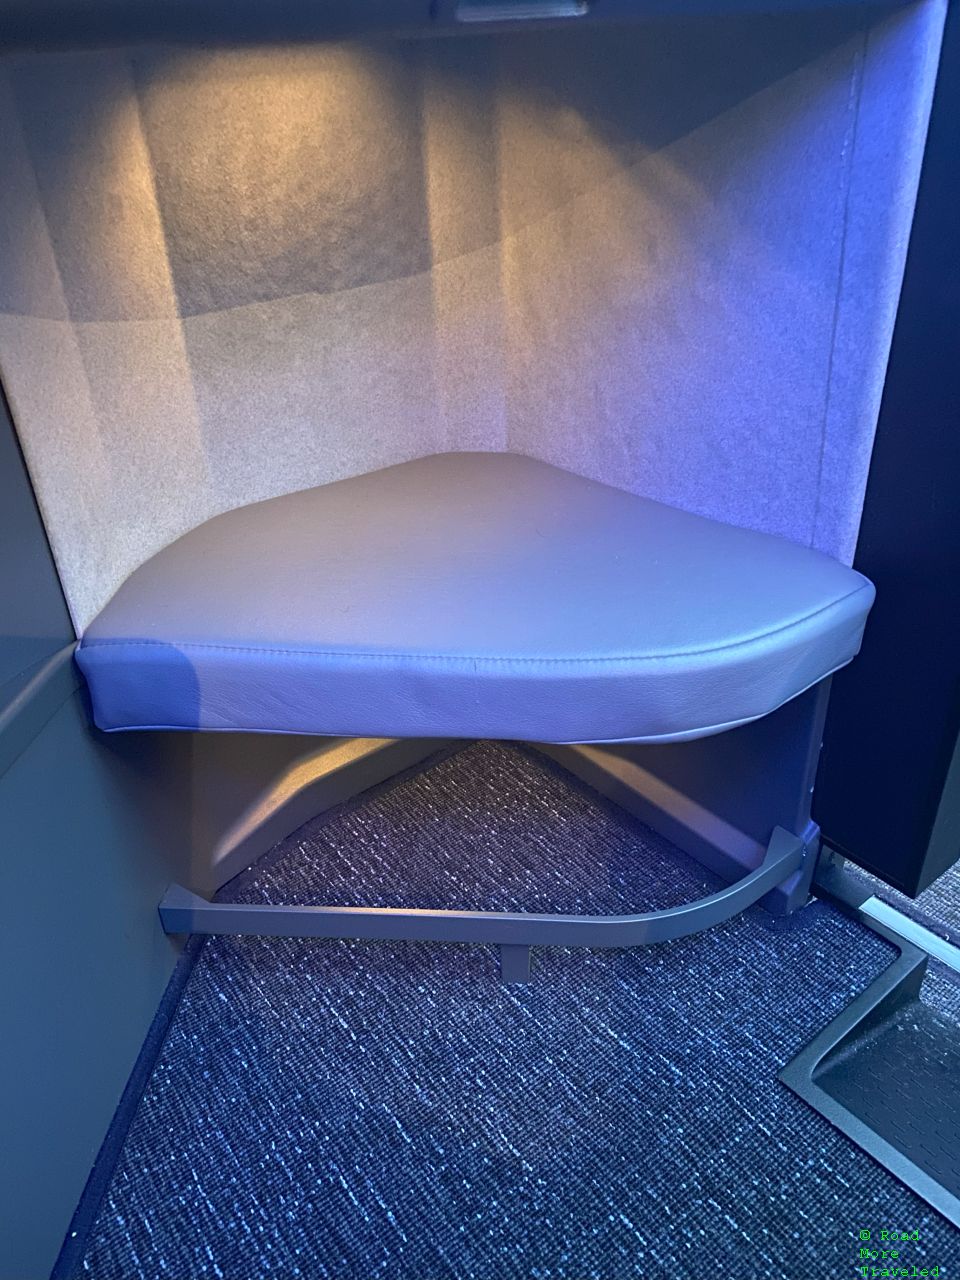 jetBlue A321neo Mint Business Class - underseat storage area